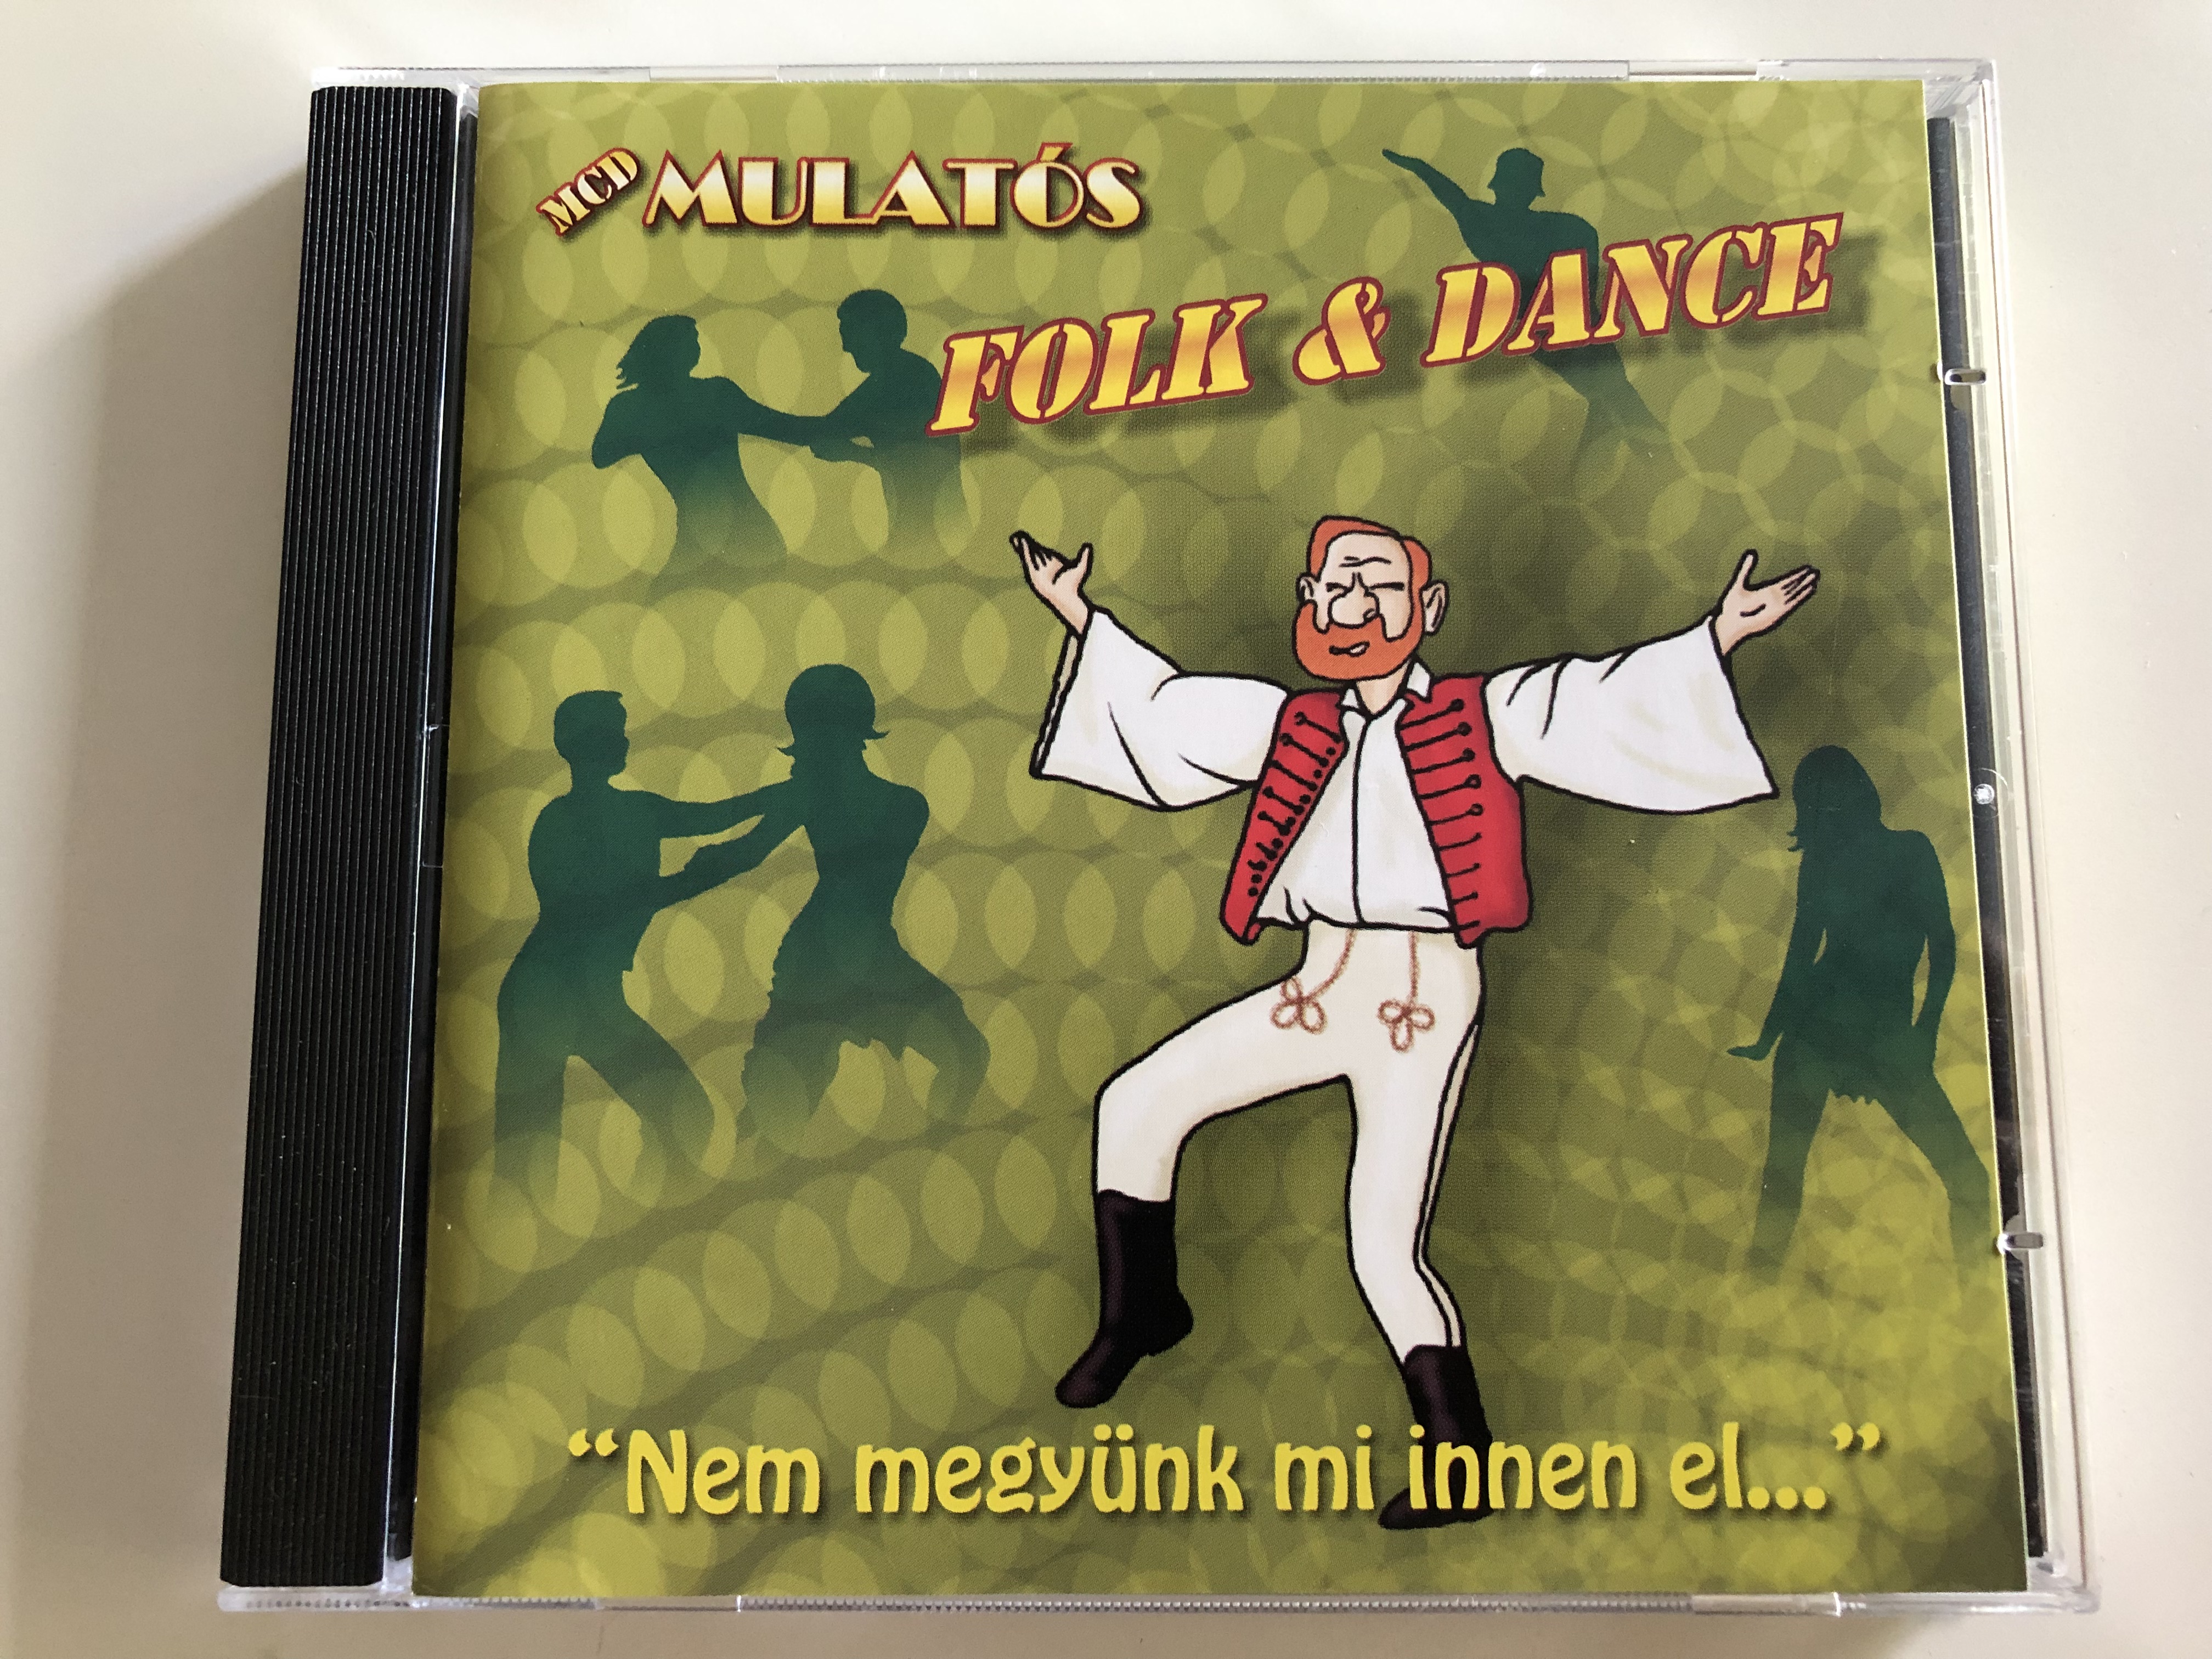 folk-dance-mcd-mulat-s-nem-megy-nk-mi-innen-el..-audio-cd-2007-0632-mcd-1-.jpg